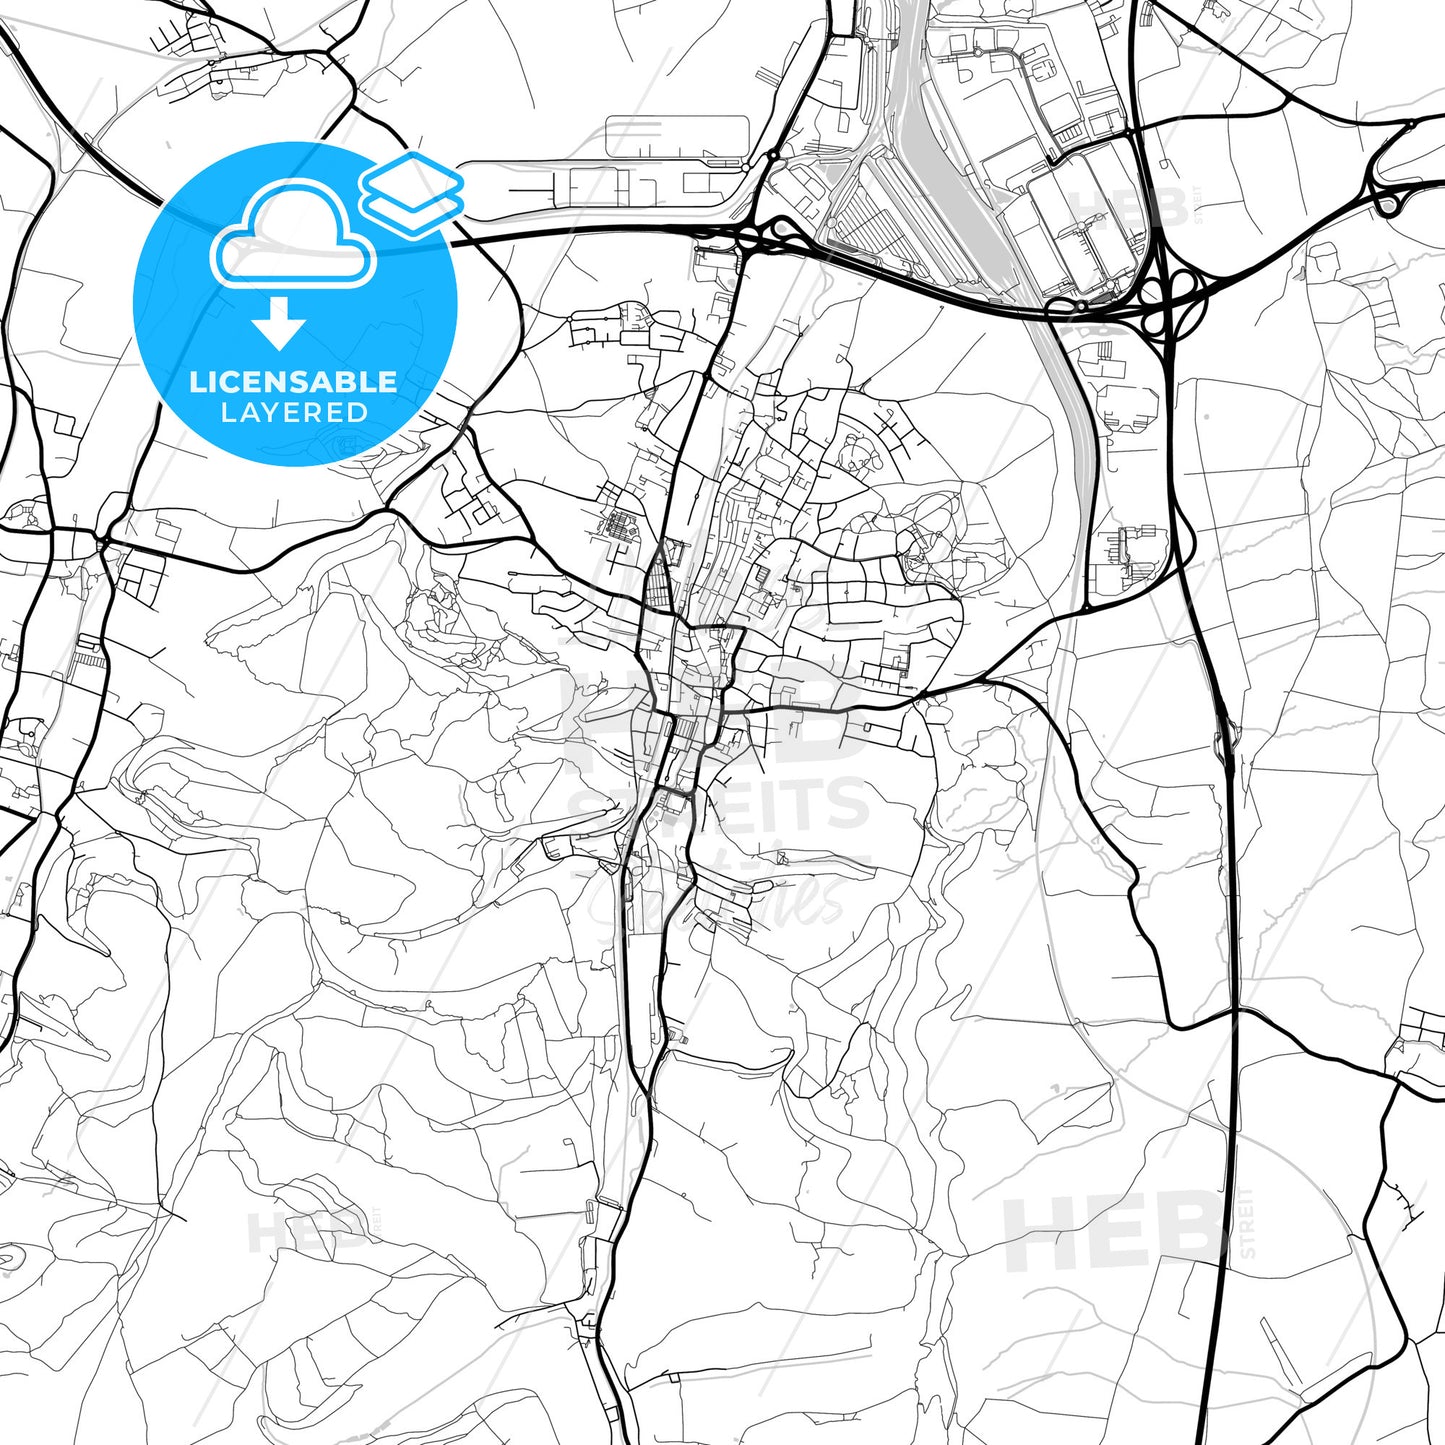 Layered PDF map of Dudelange, Esch-sur-Alzette, Luxembourg